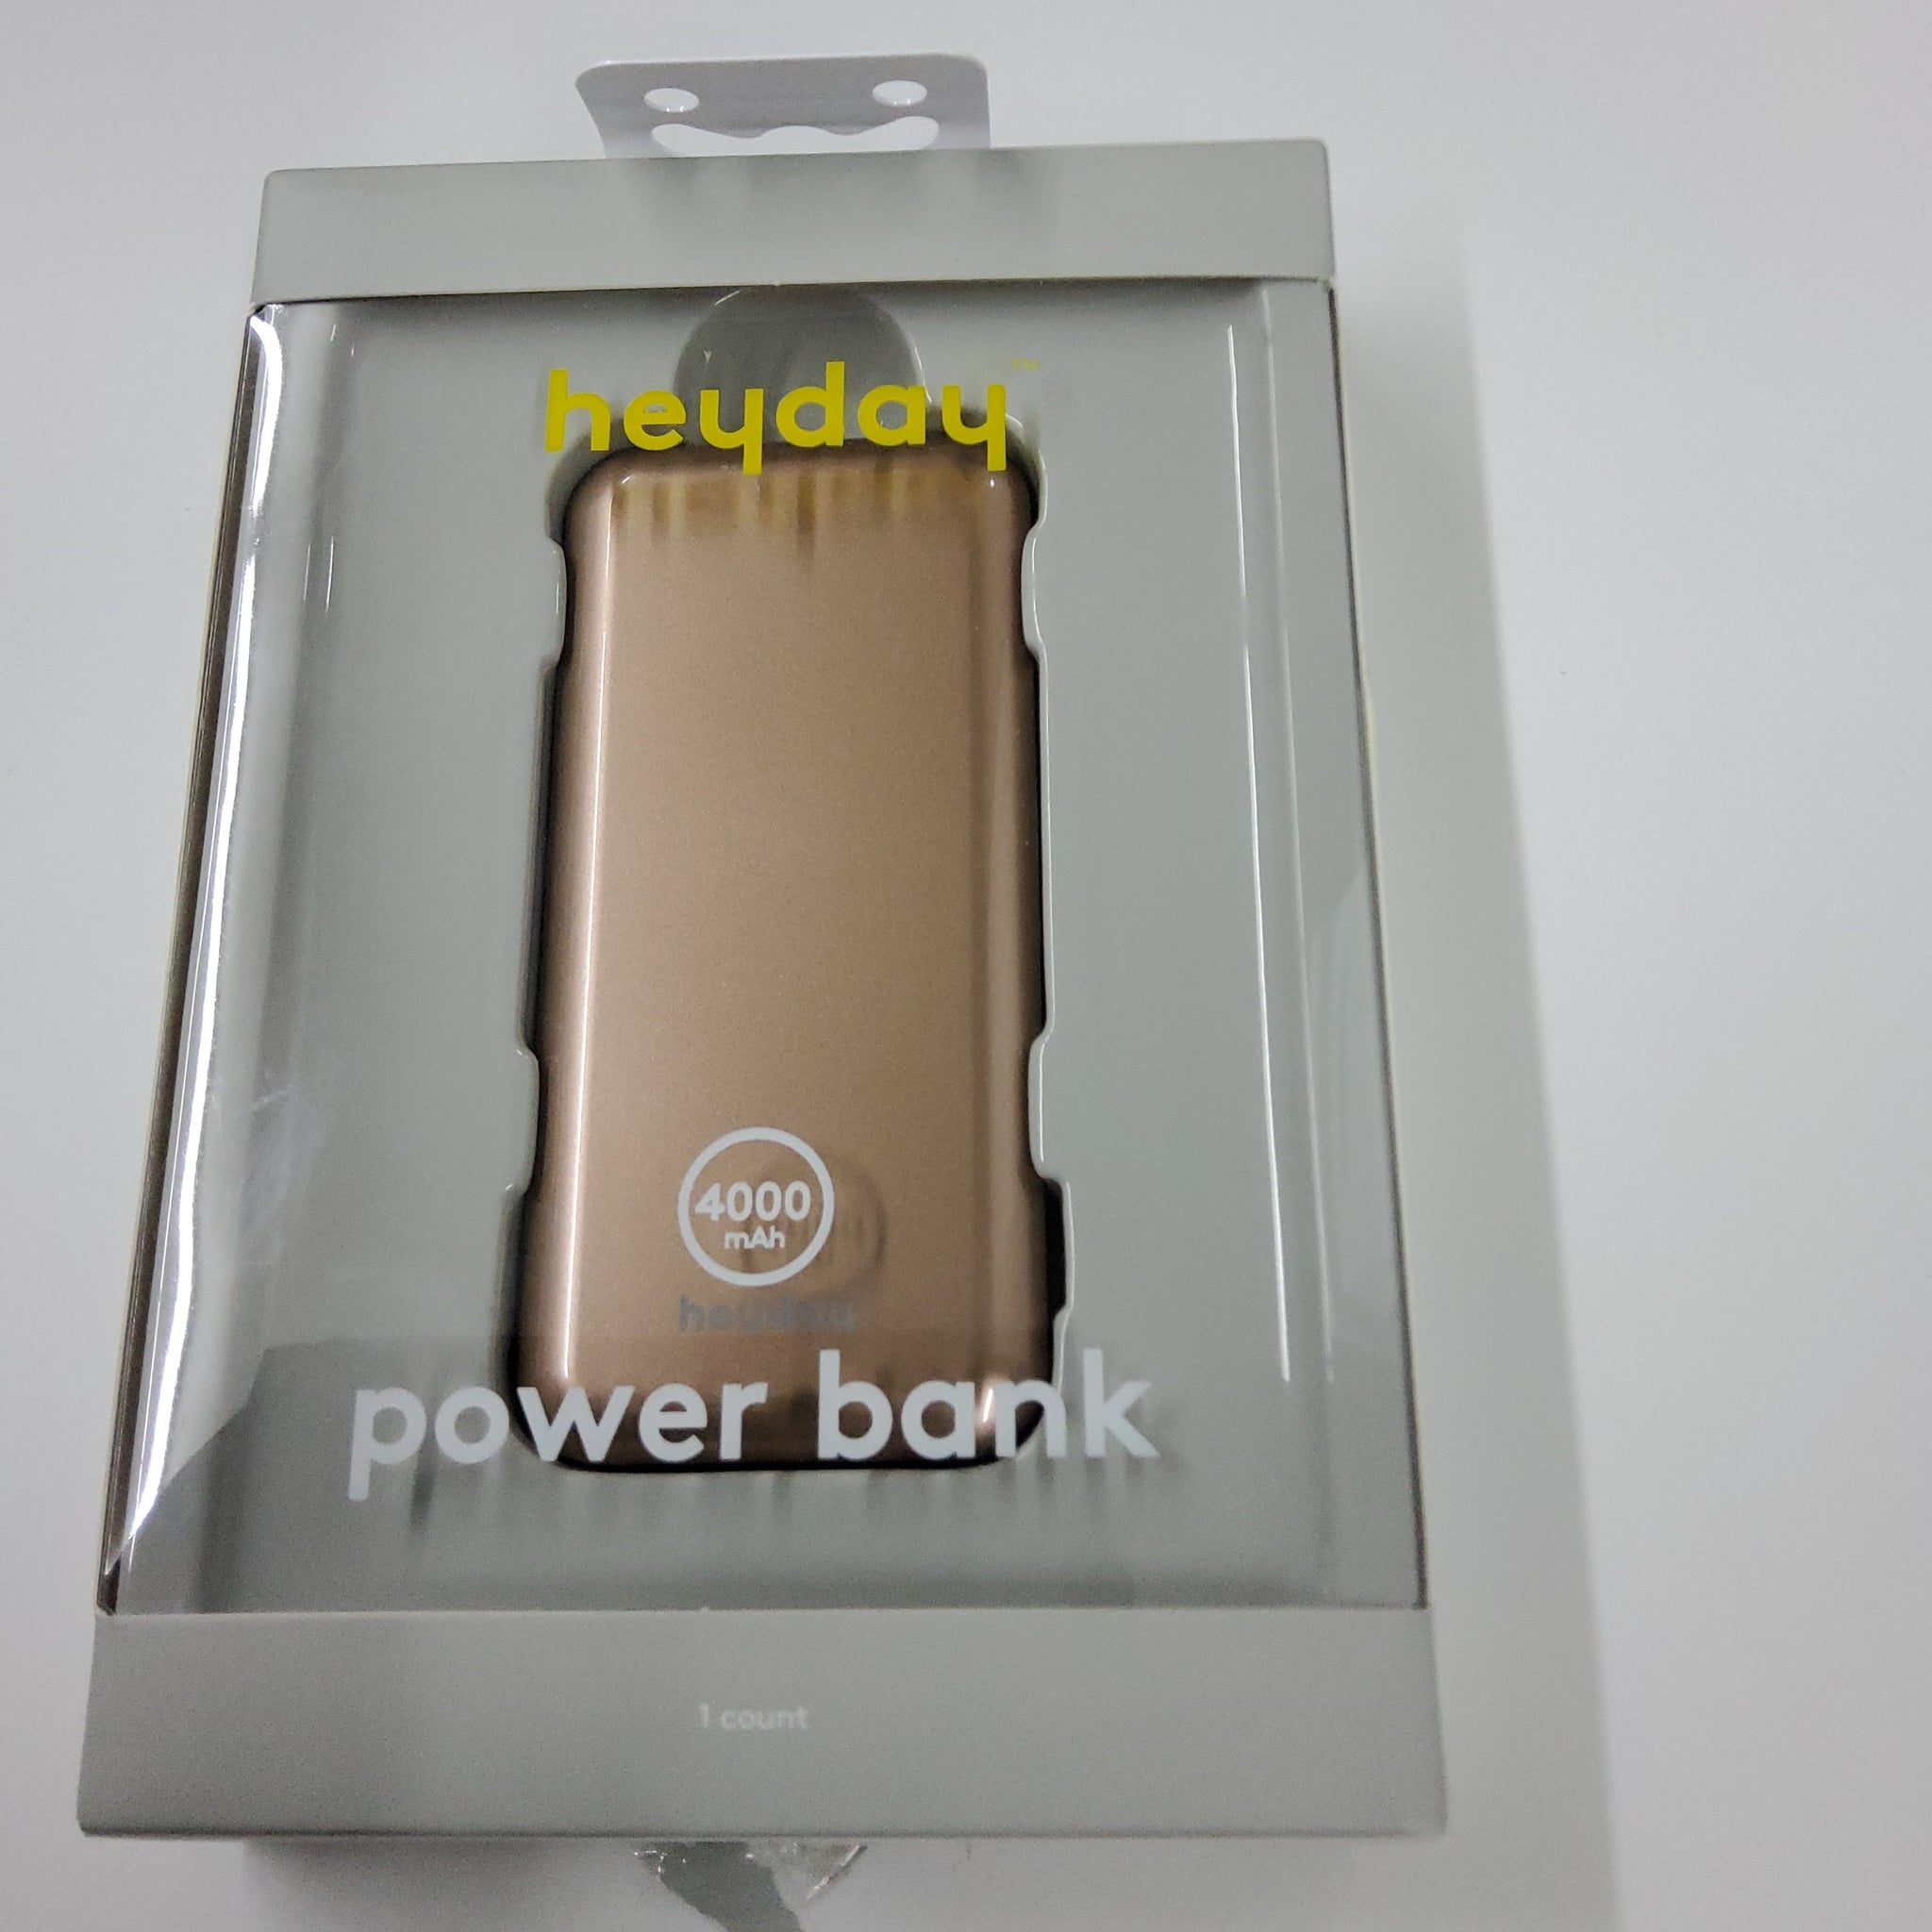 Heyday 4000mAh Power Bank - Gold Metallic 